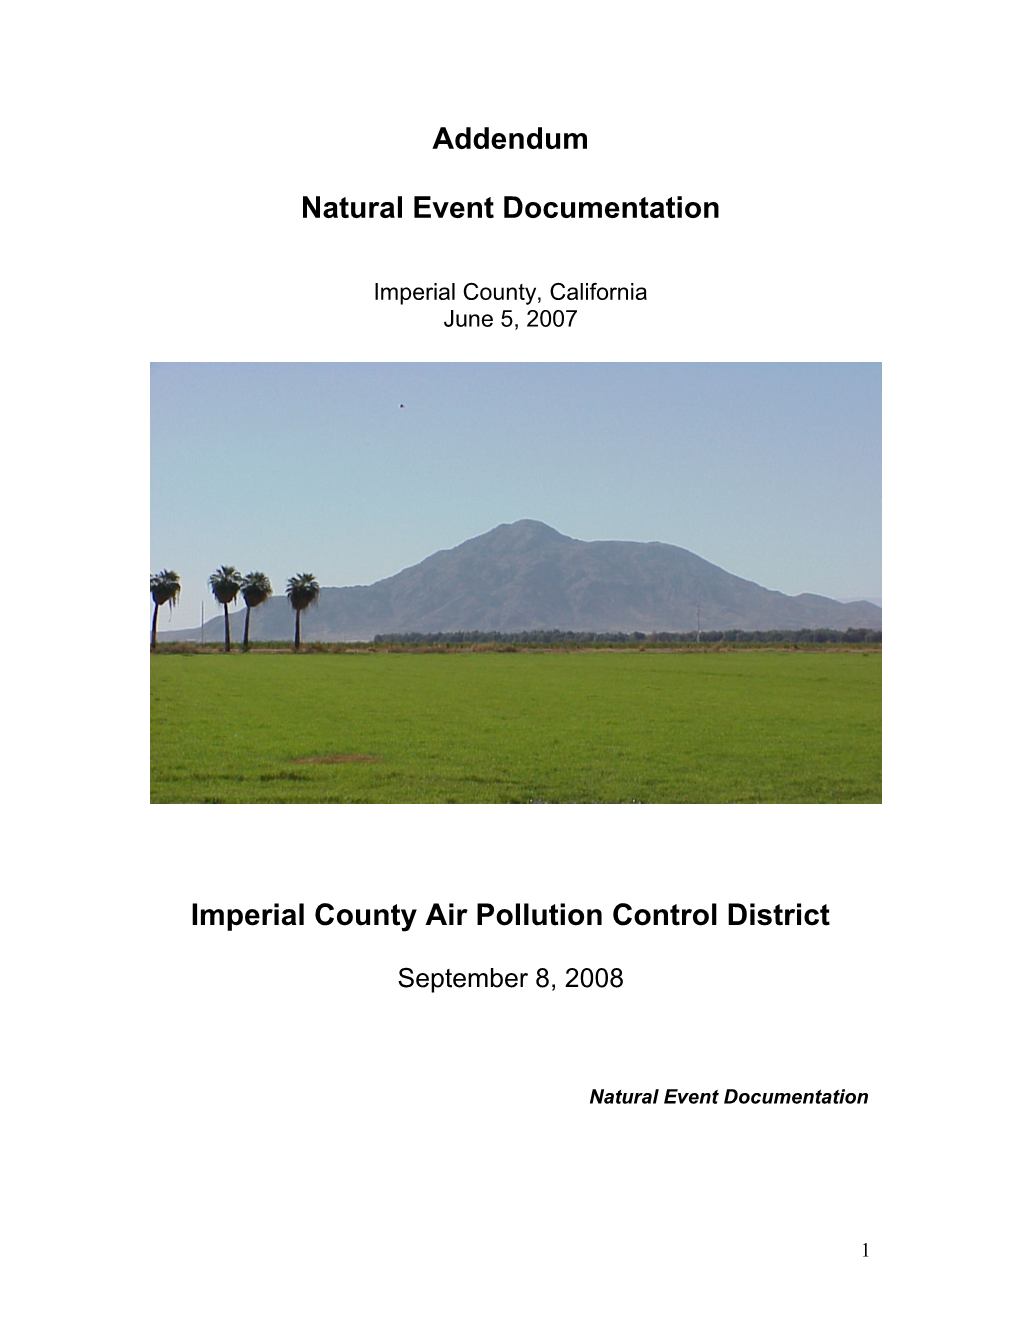 Natural Event Documentation